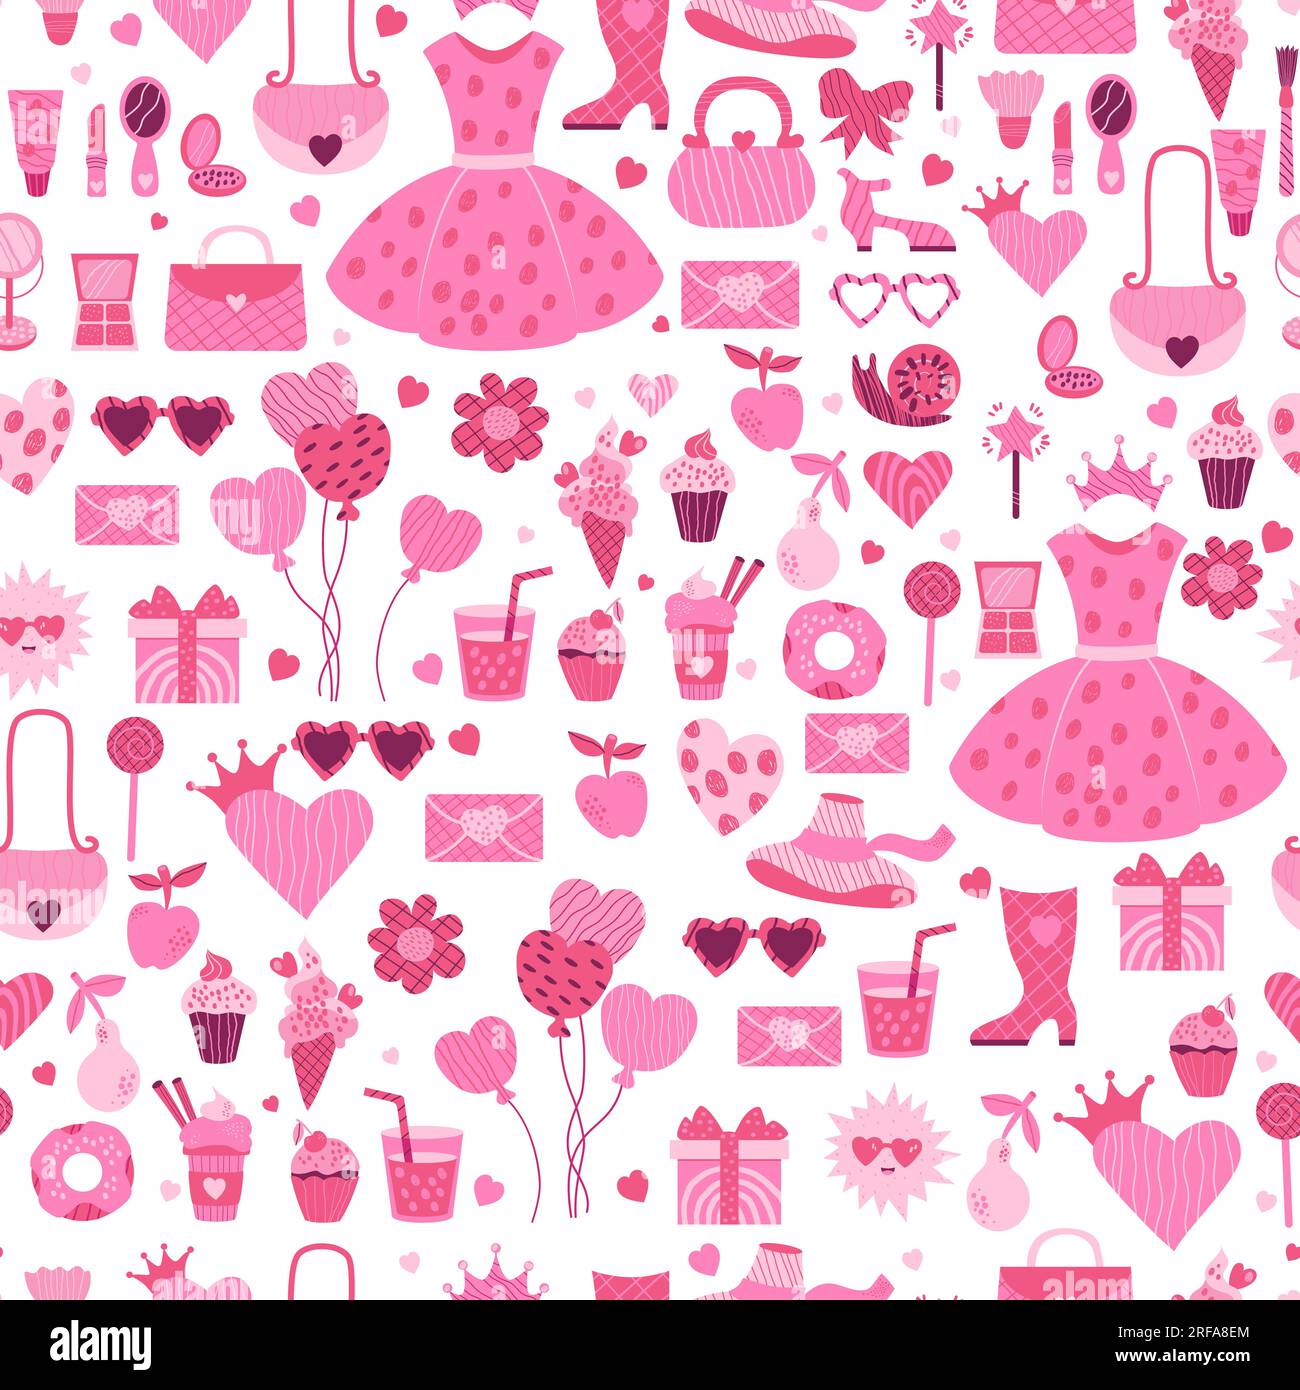 Barbiecore pink doll aesthetic seamless pattern. Glamorous trendy